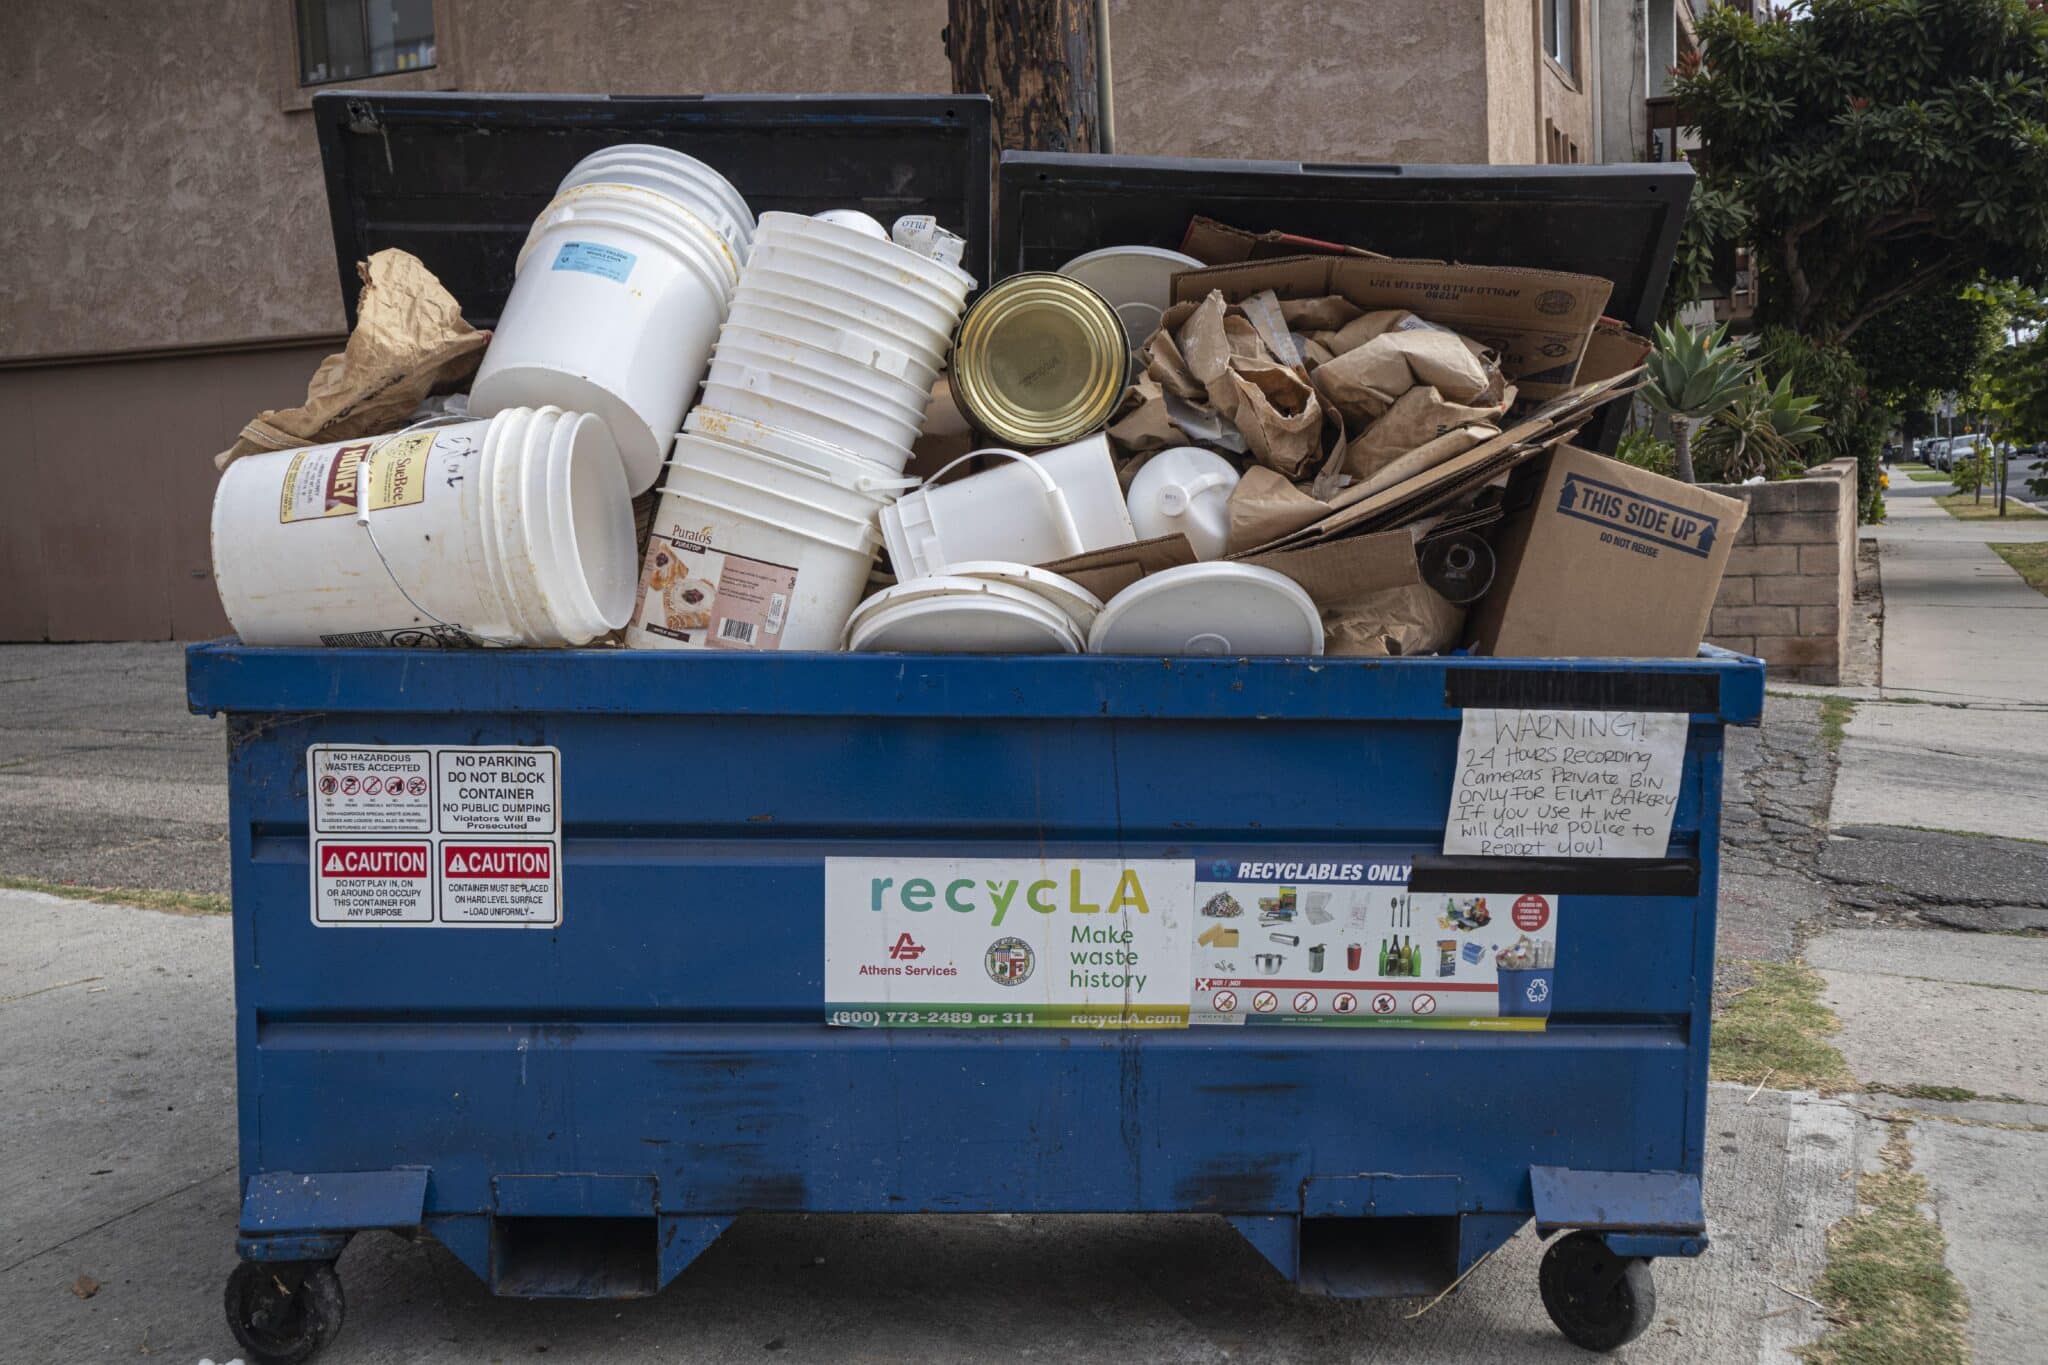 Recycling in the U.S. Is Broken. How Do We Fix It?